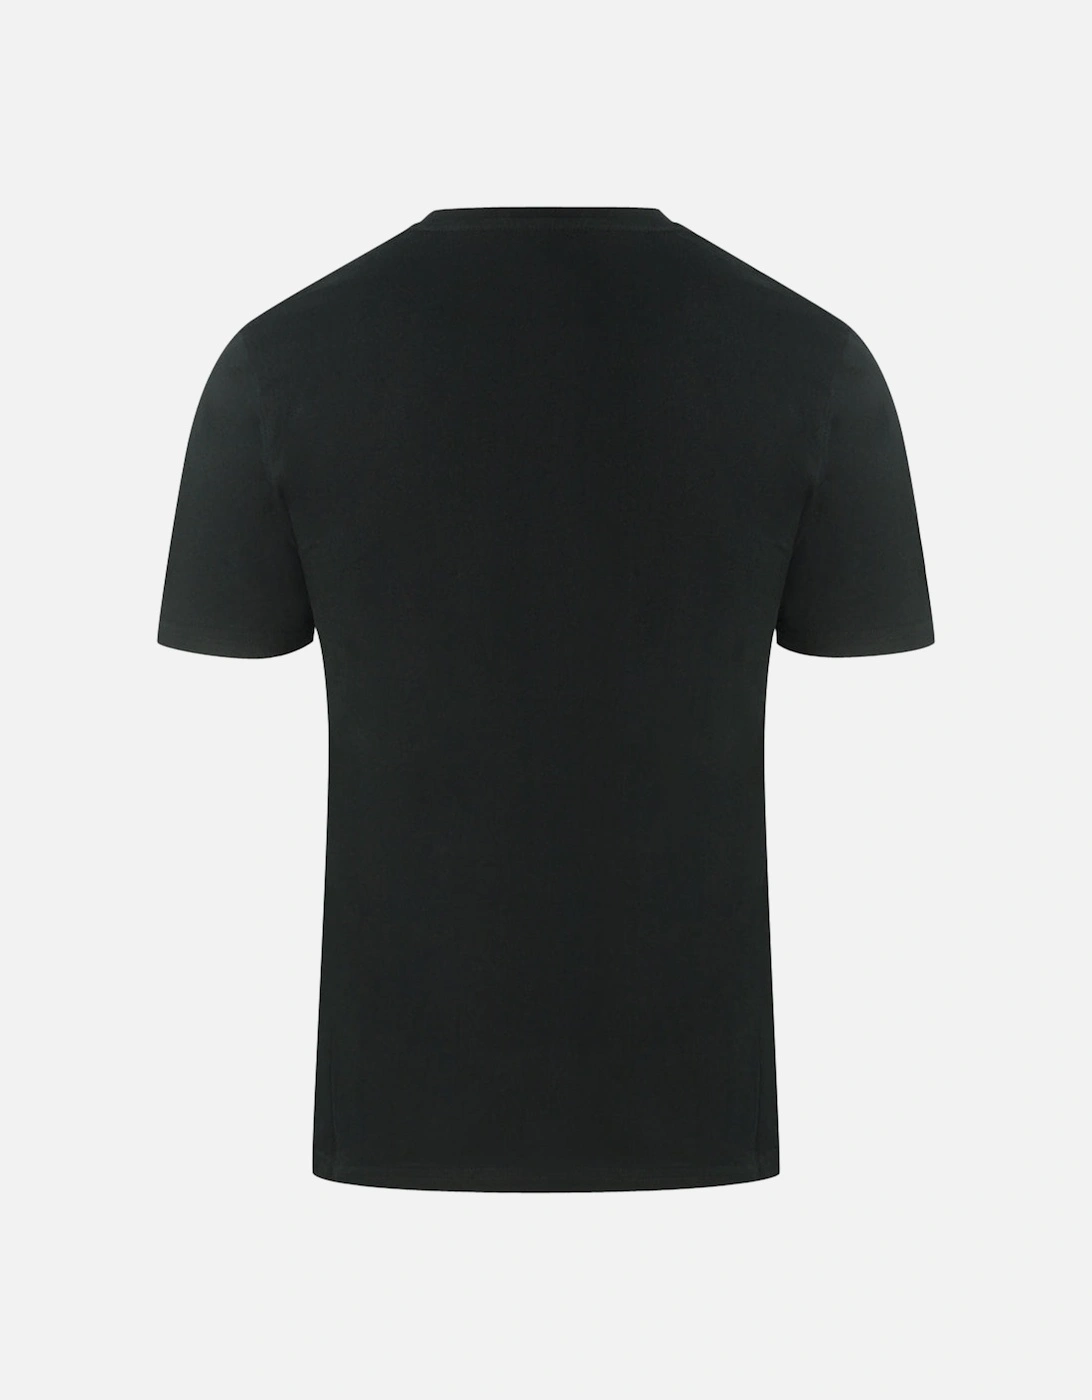 Master Sailmakers Black T-Shirt